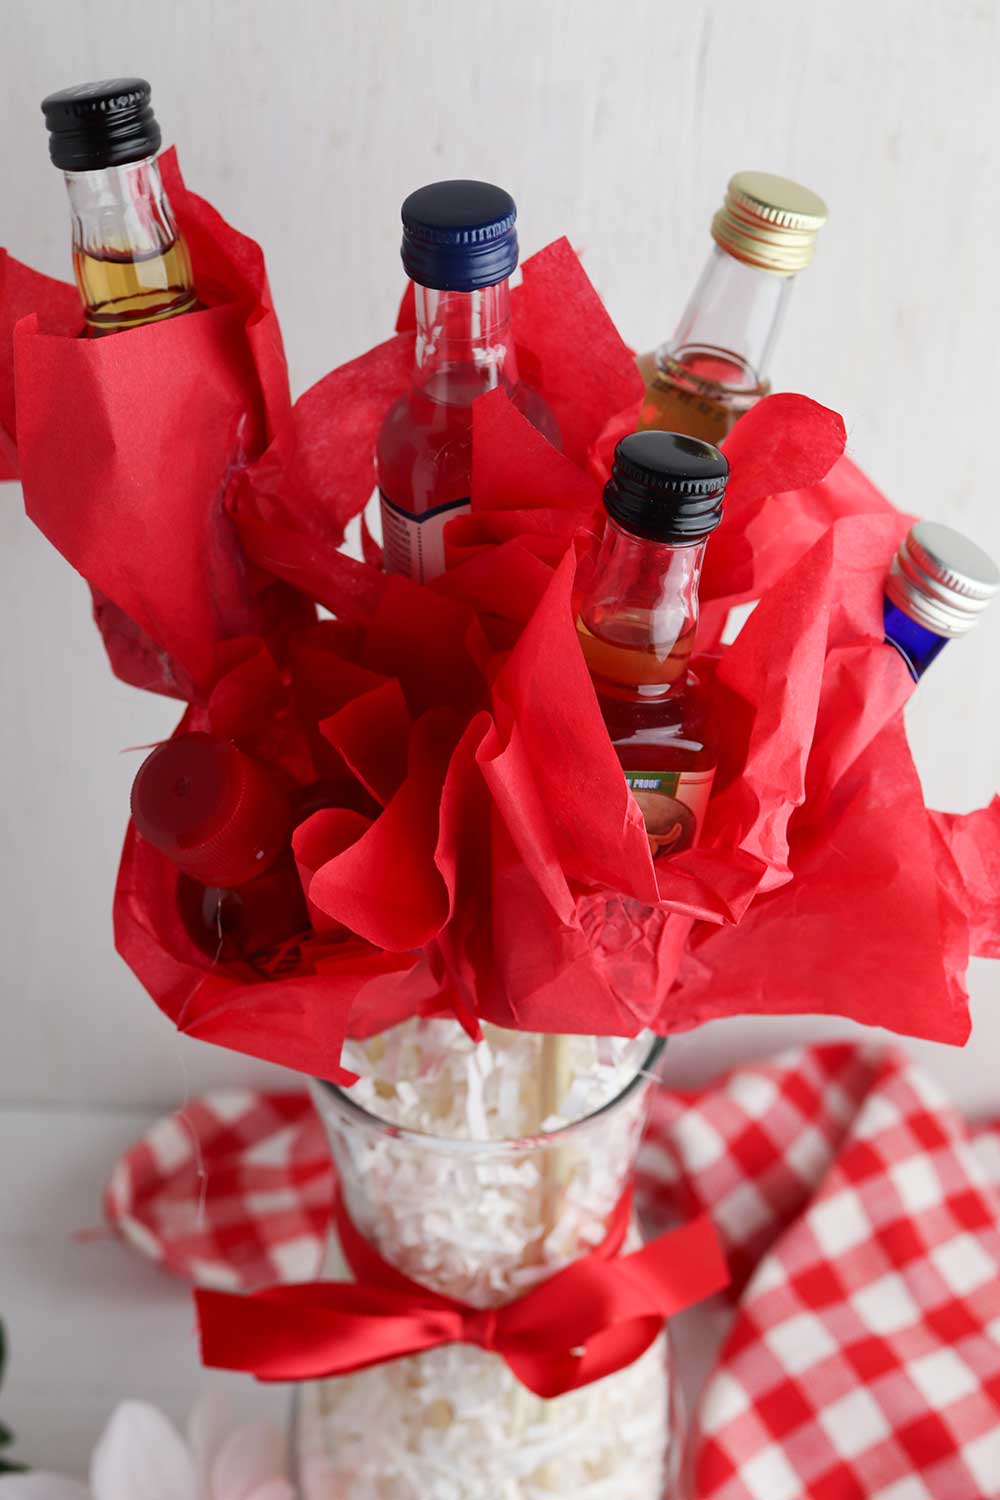 DIY mini liquor bottle bouquet in a vase